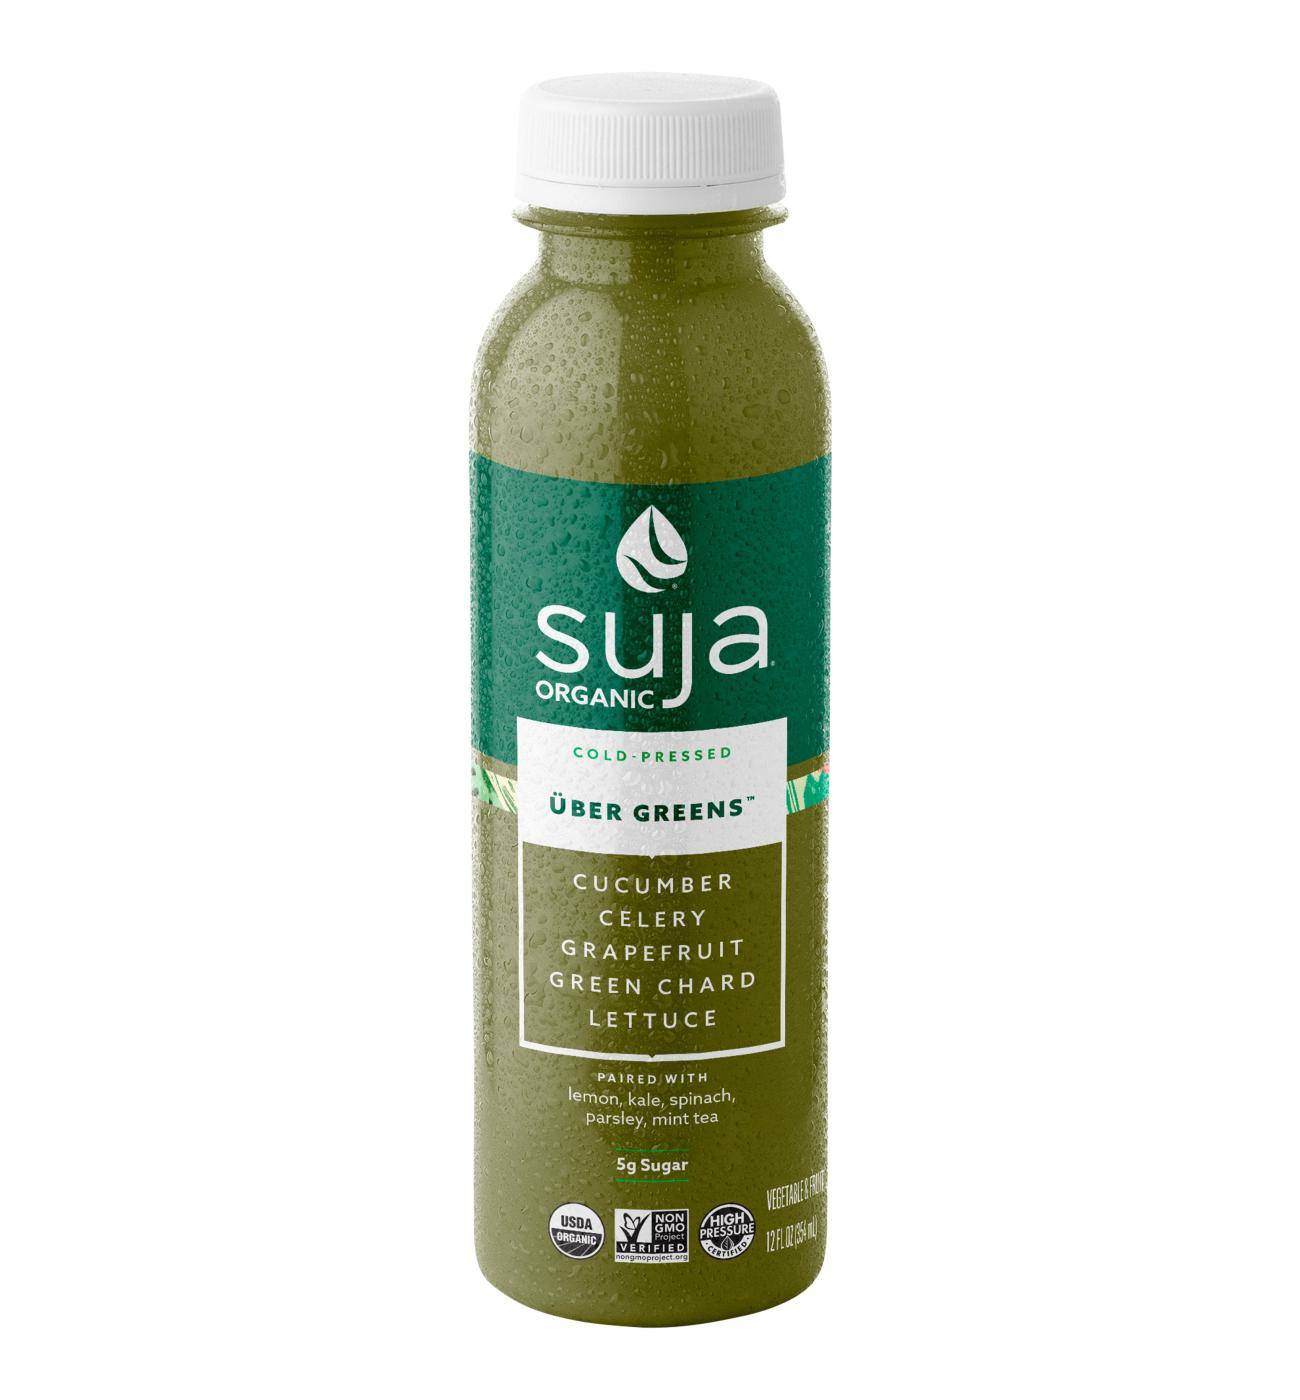 Suja Uber Greens Organic Cold-Pressed Juice; image 1 of 2